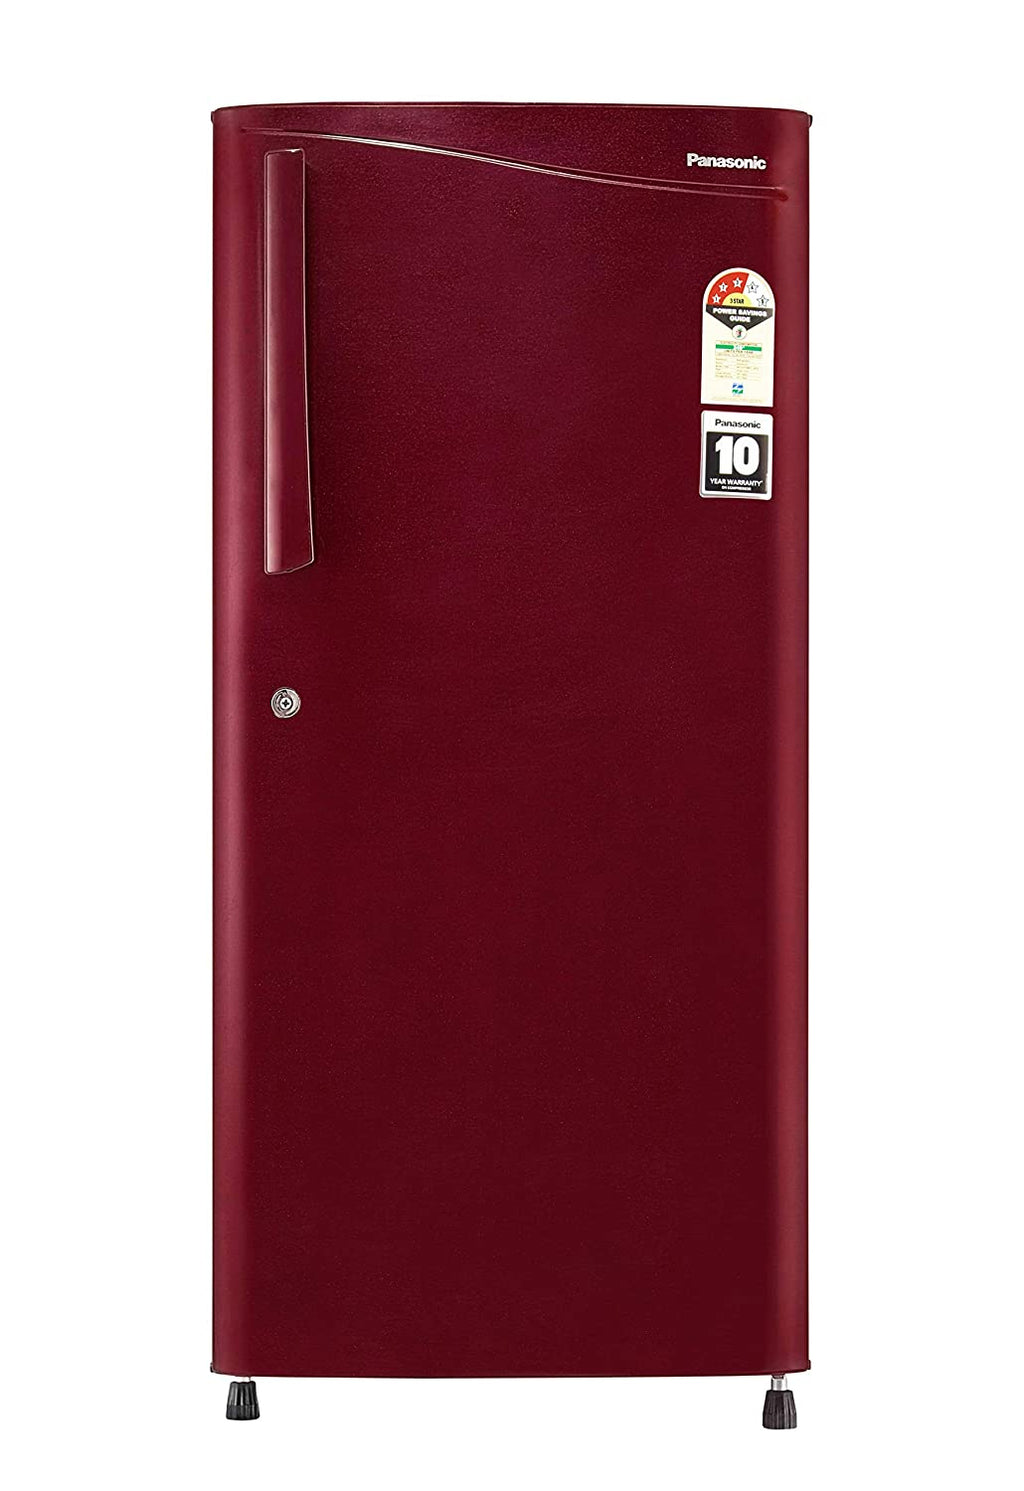 Panasonic 194 L 3 Star Inverter Direct-cool Single Door Refrigerator Nr-a193vmx1 Maroon Hairline